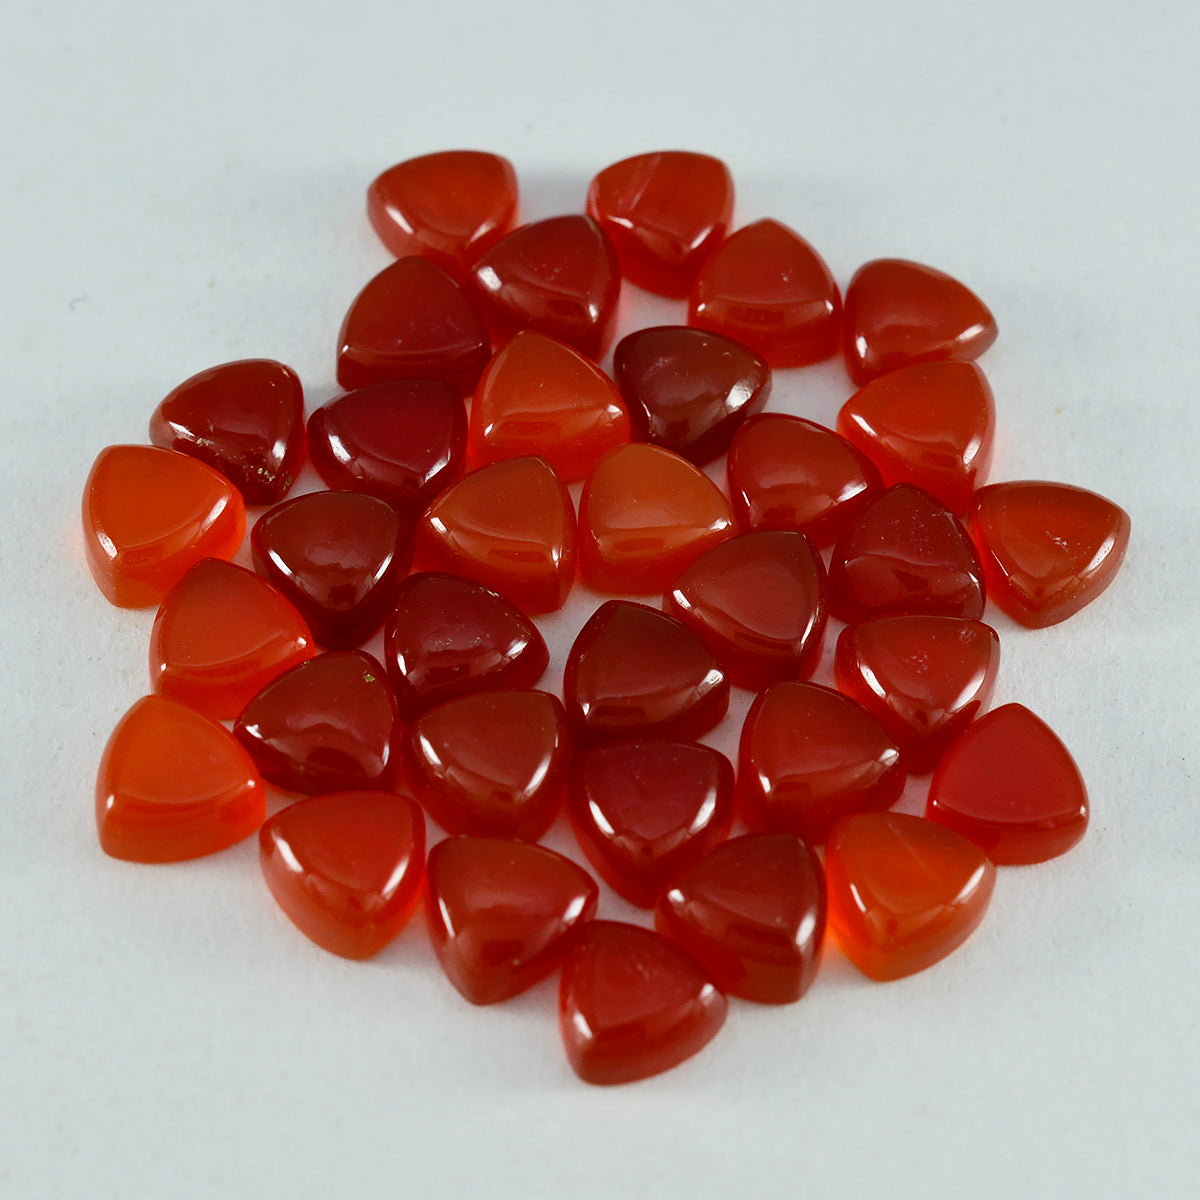 Riyogems 1PC Red Onyx Cabochon 9x9 mm Trillion Shape handsome Quality Gemstone